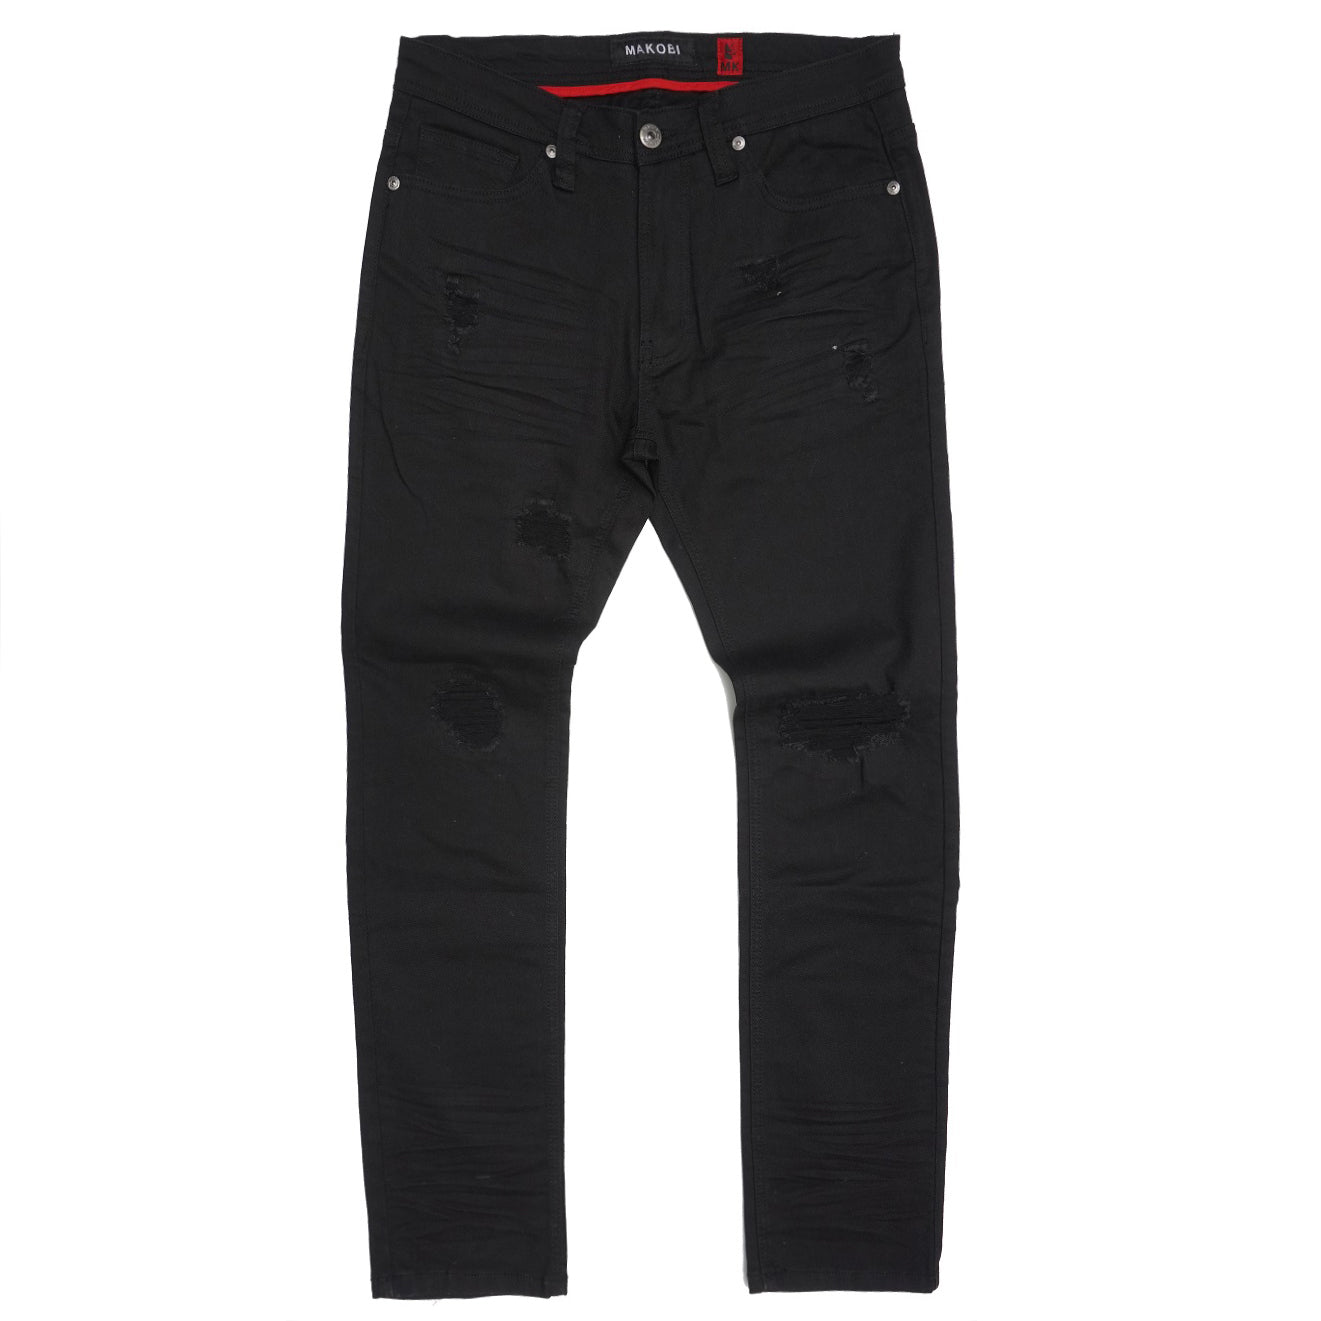 M1932 Makobi Brighton Shredded Twill Jeans - Black – Makobi Jeans USA